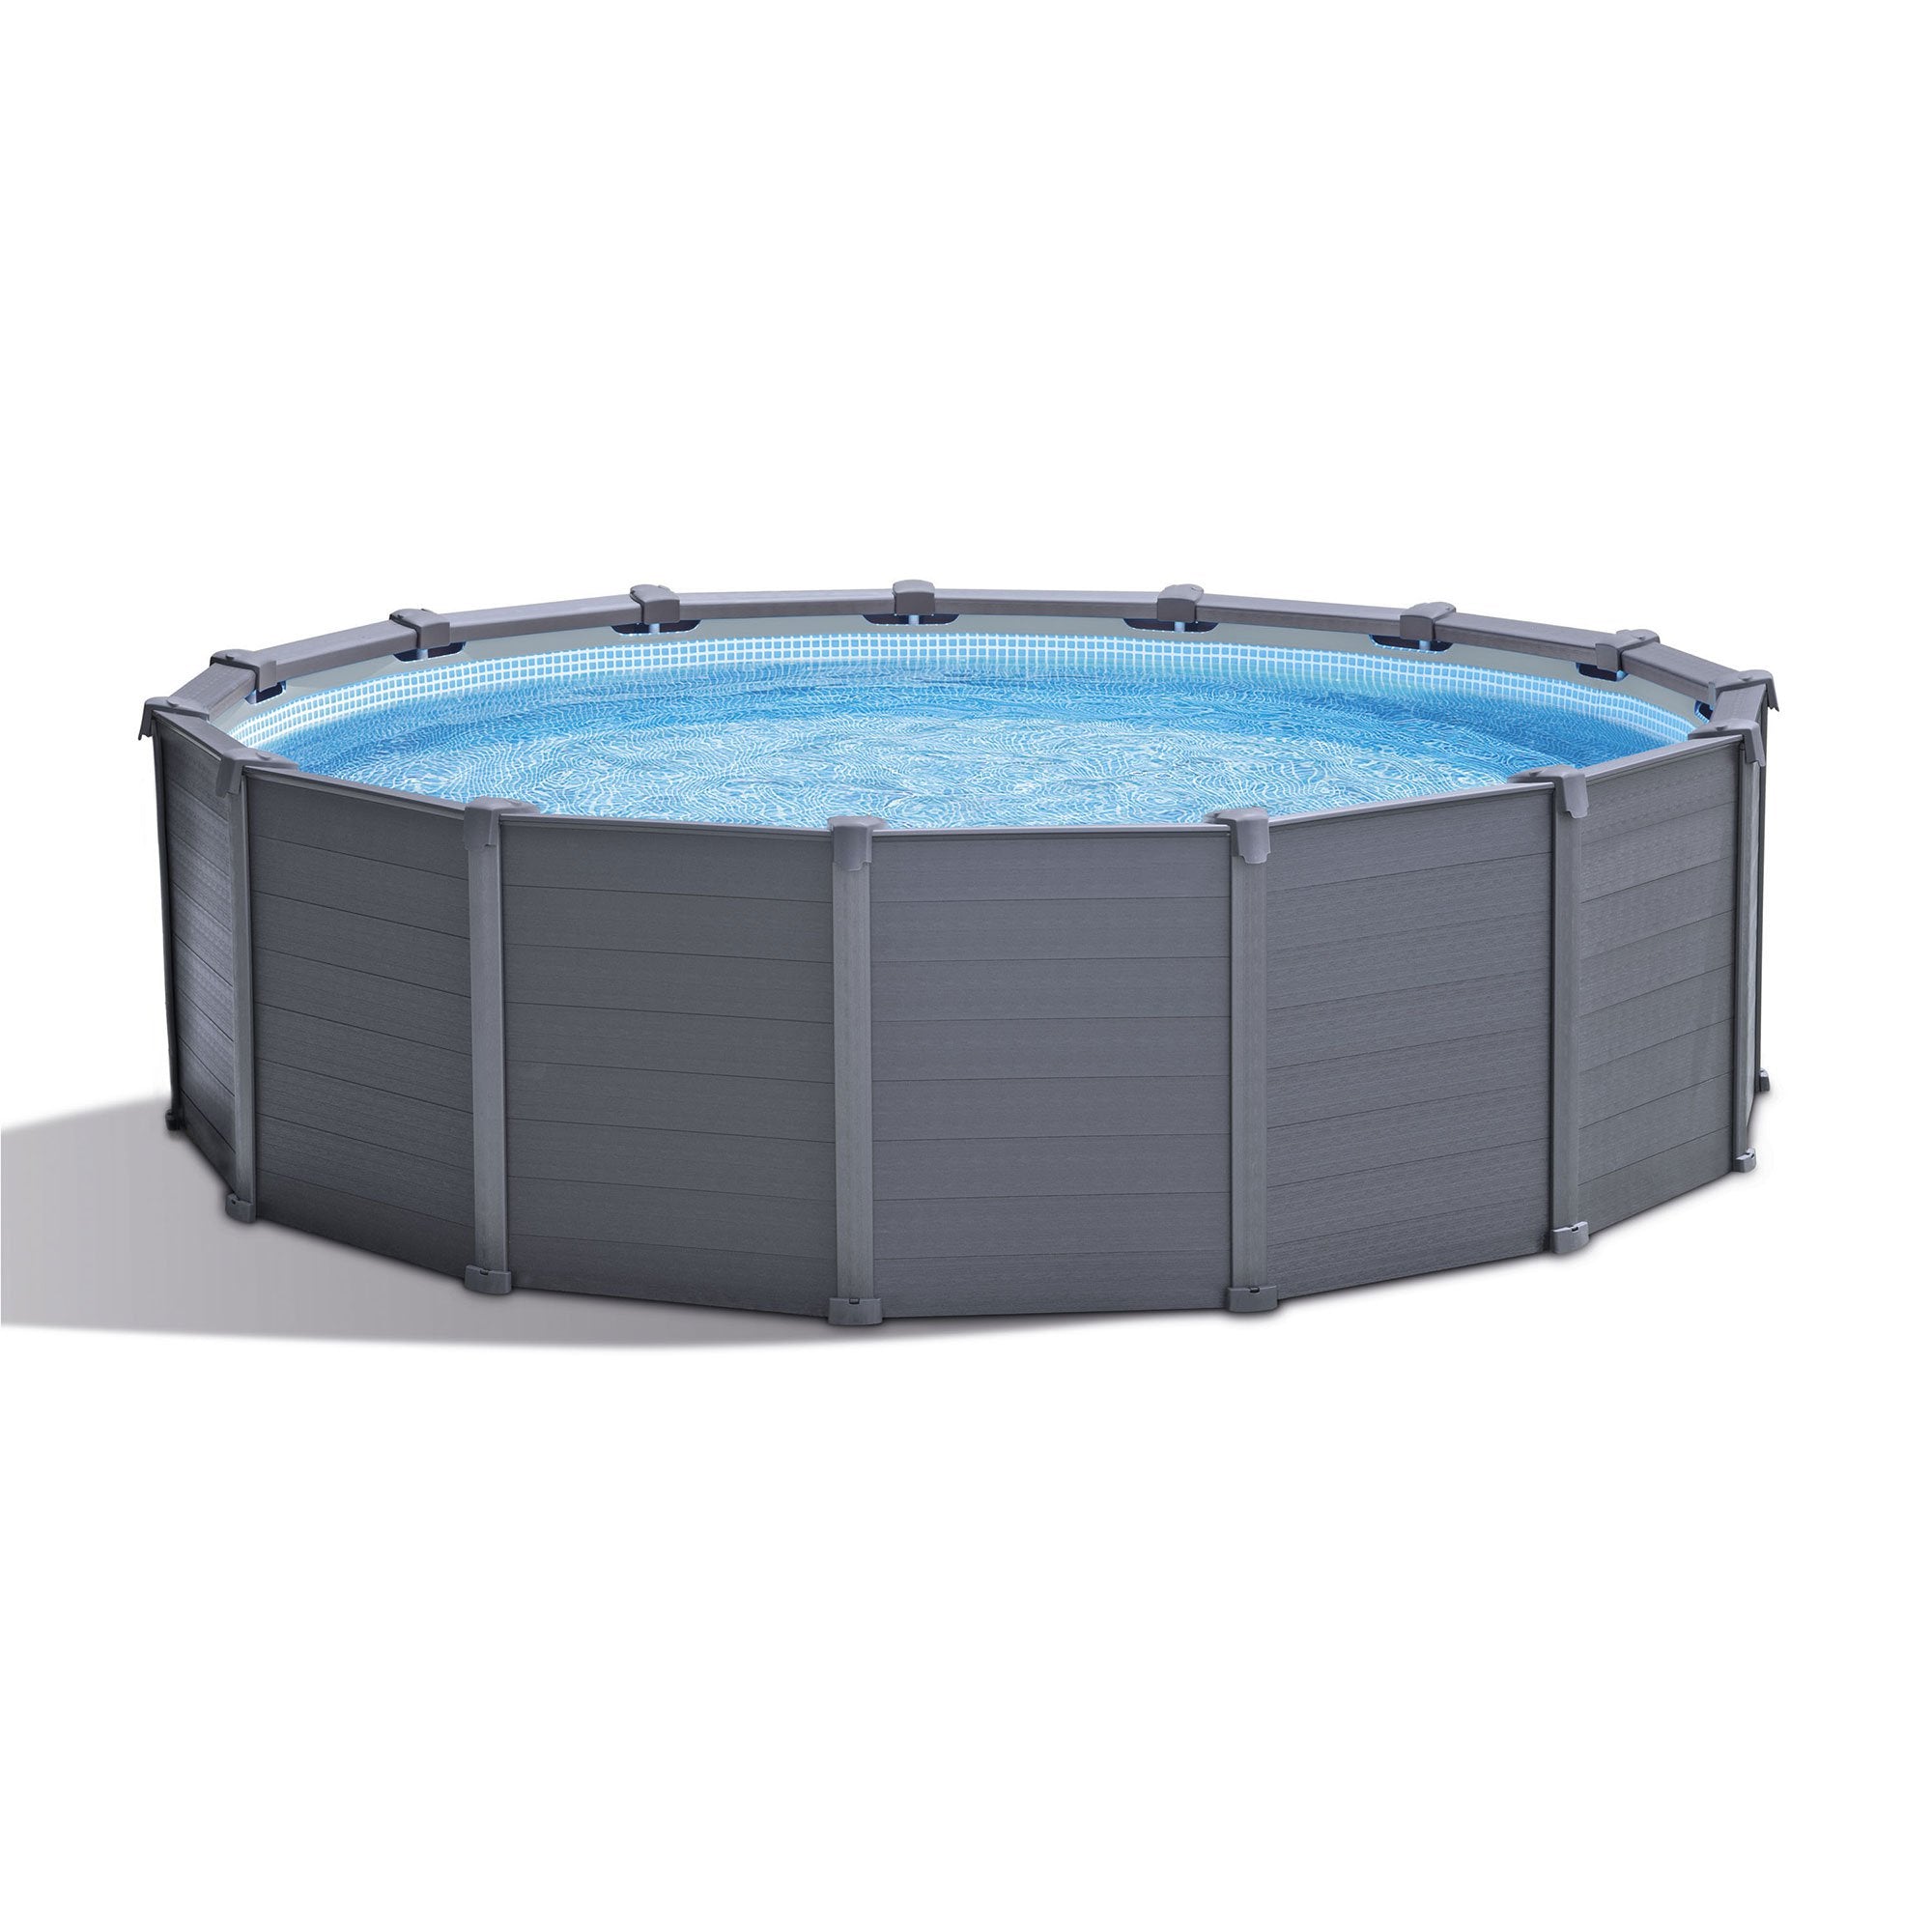 Intex 15'8x49 Metal Frame Above Ground Swimming Pool, Graphite Gray